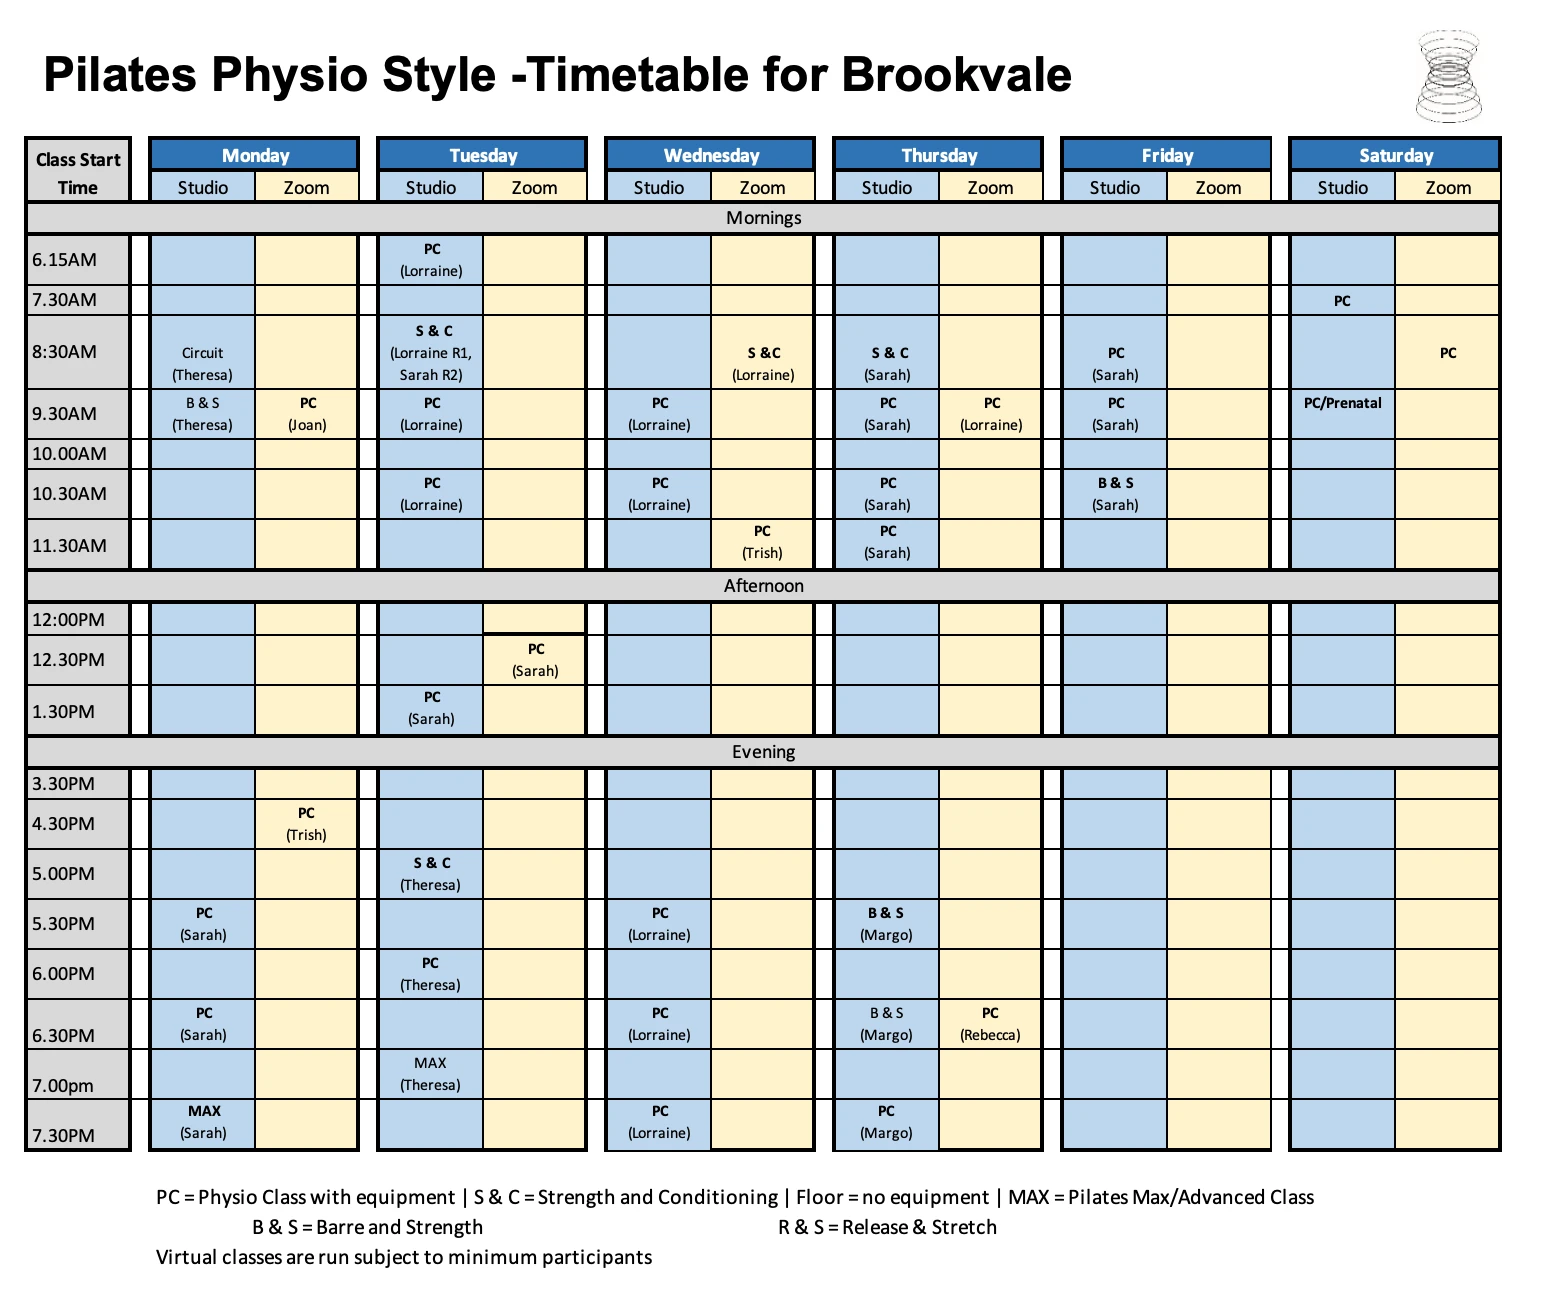 Pilates Physio Style Brookvale timetable